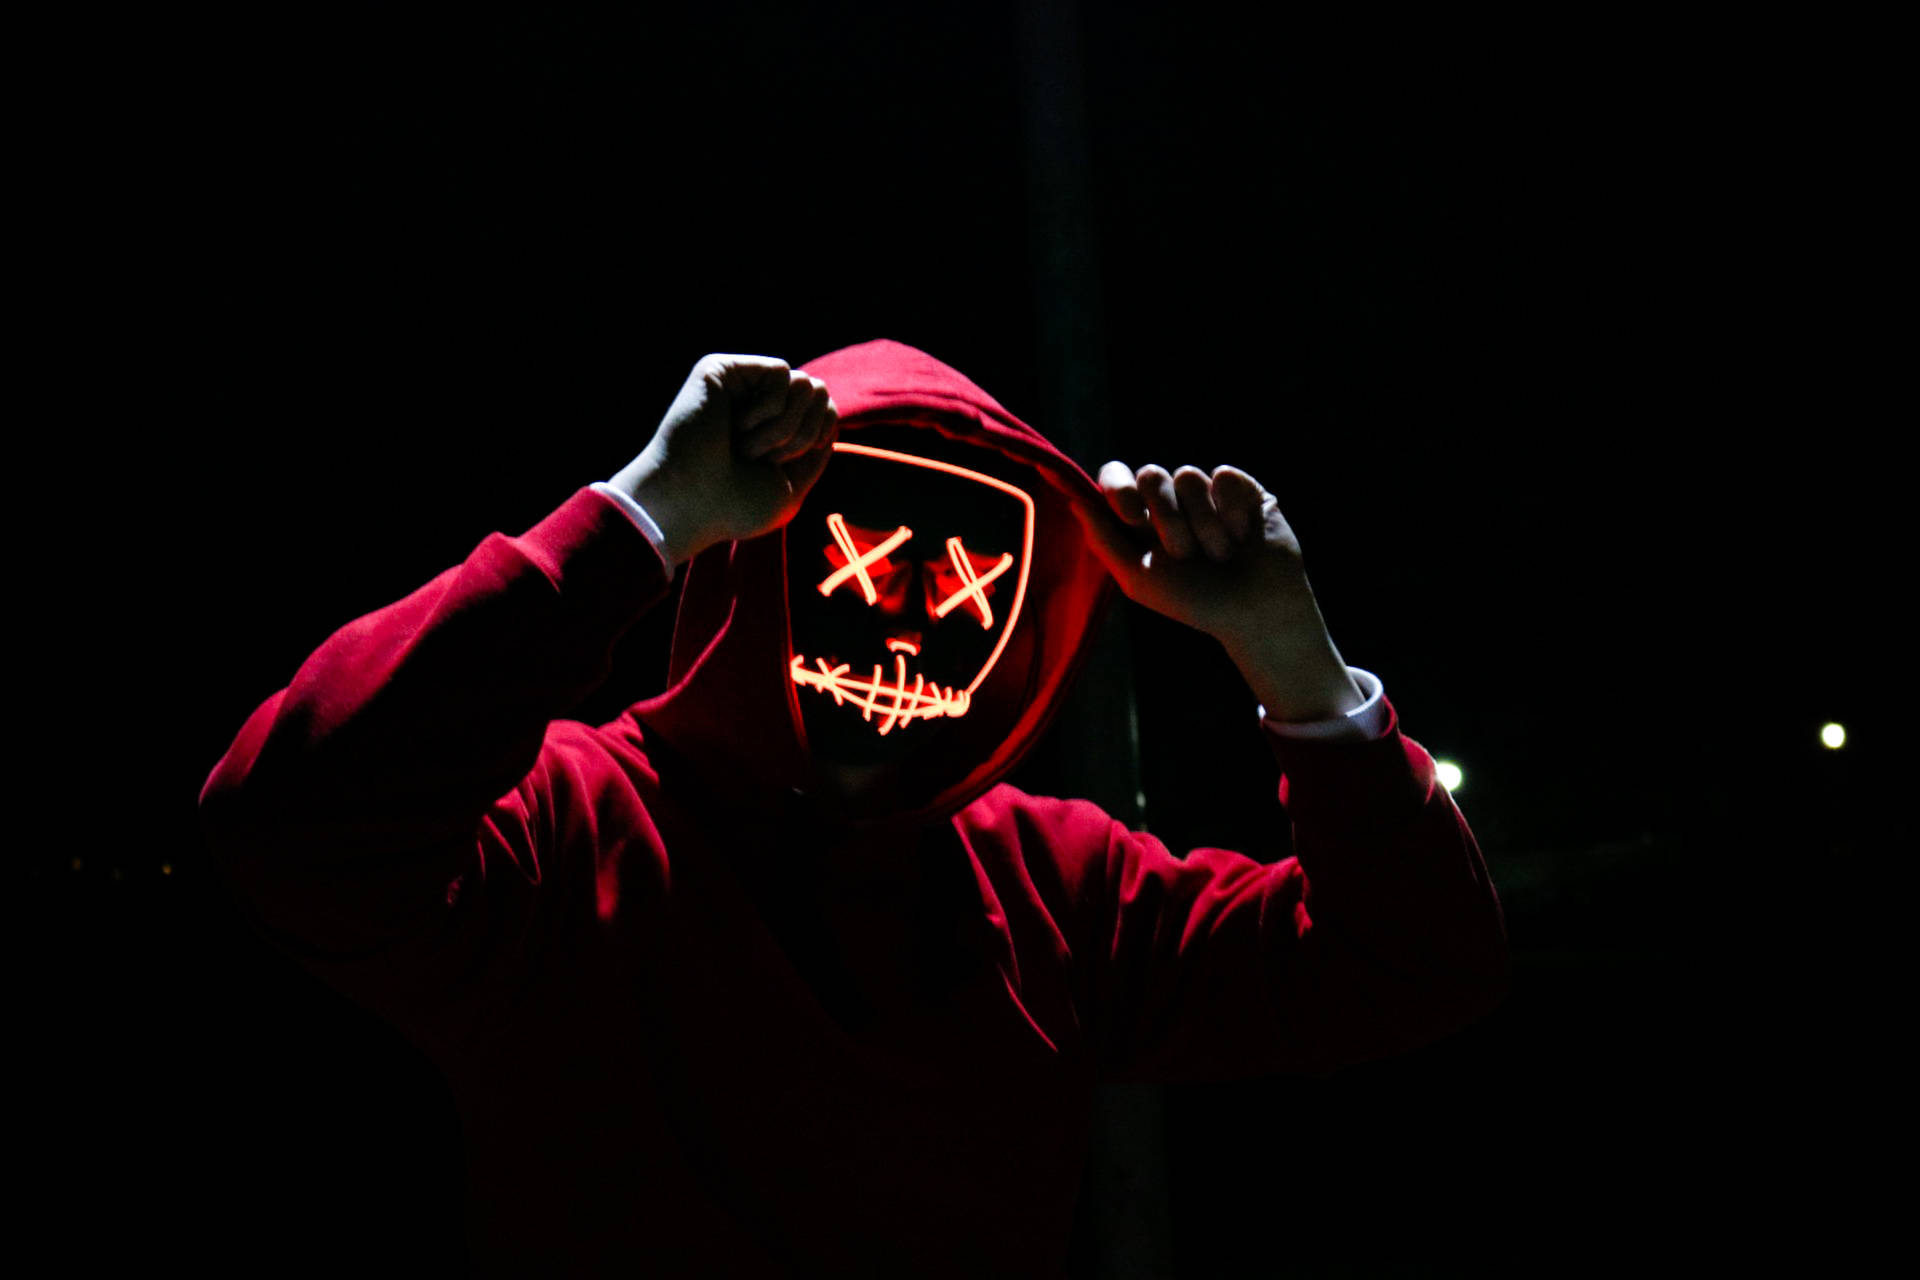 Caption: Enigmatic Figure In Dark Red Hoodie